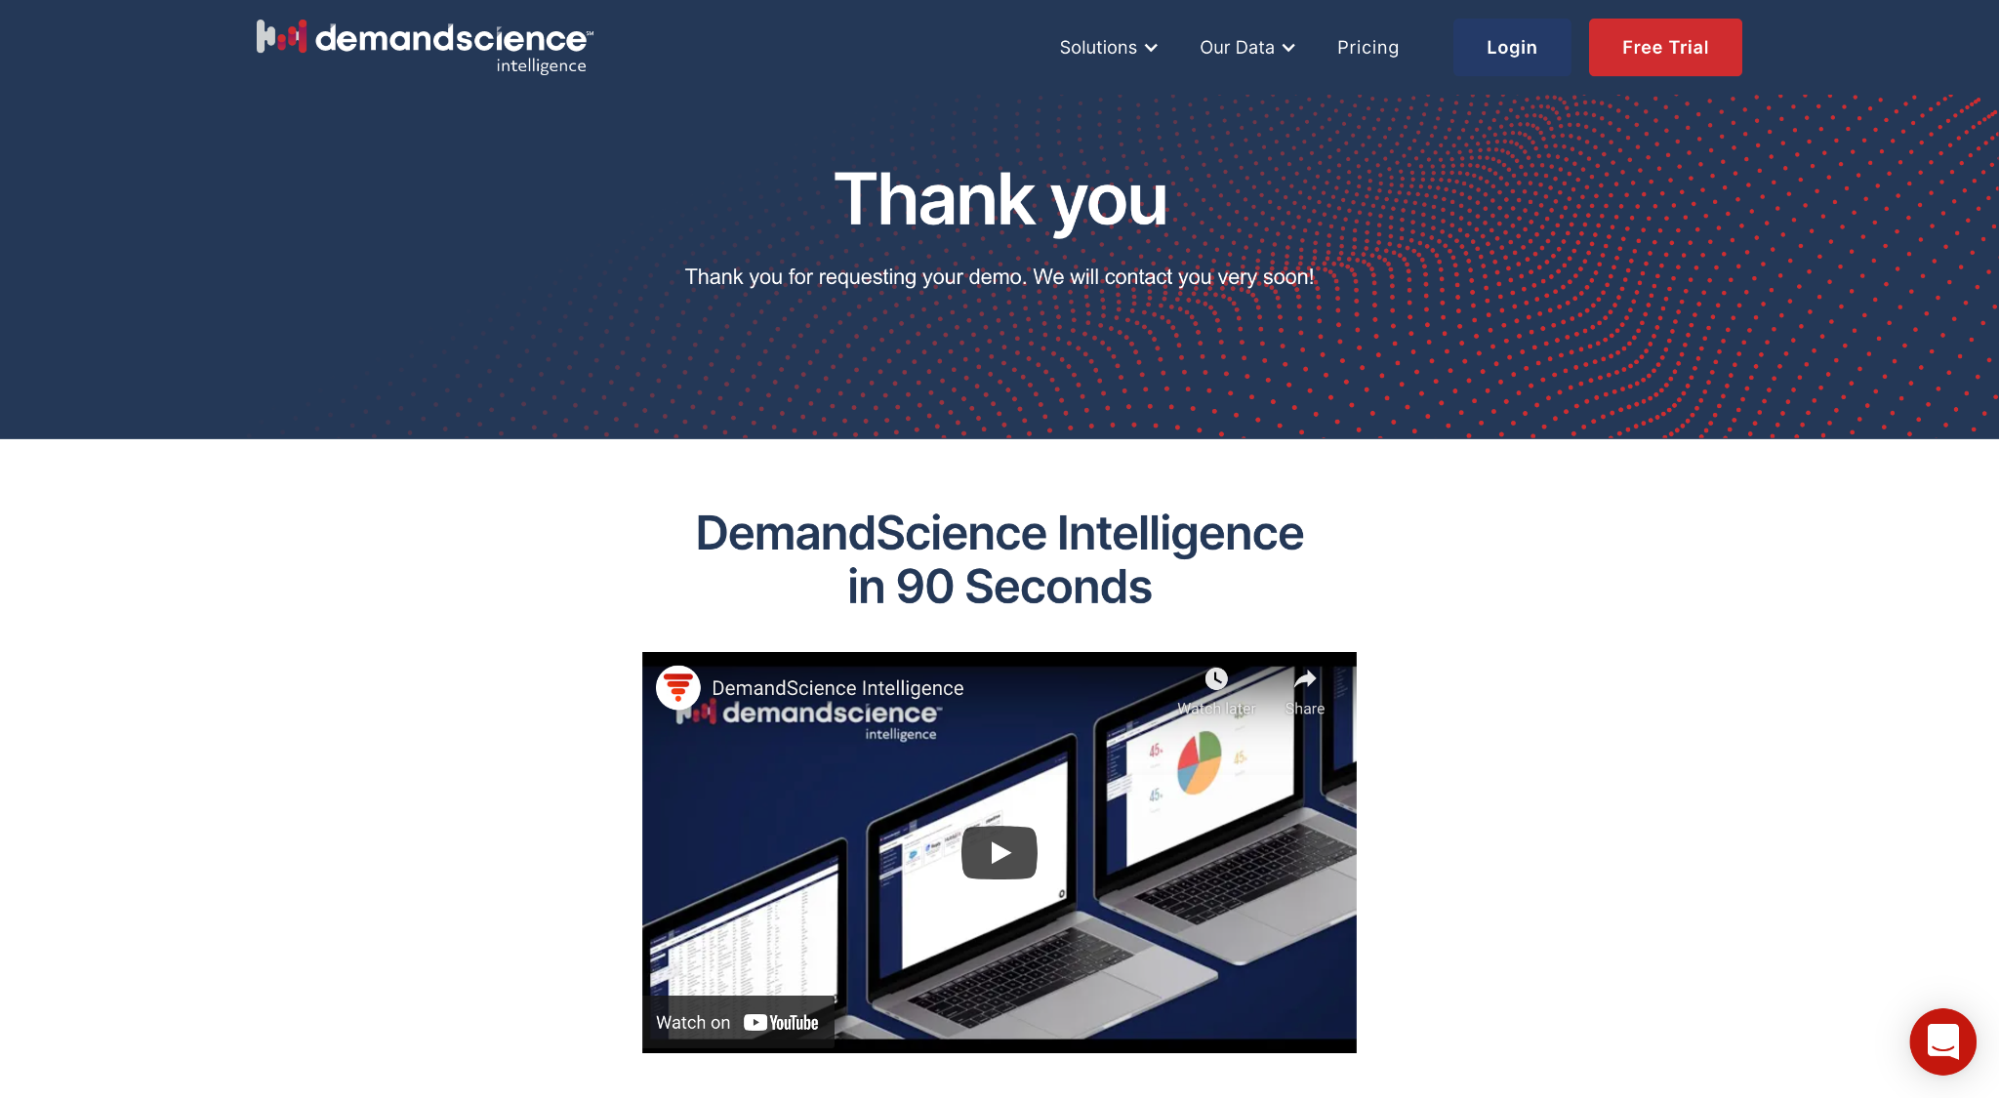 DemandScience’s demo confirmation page